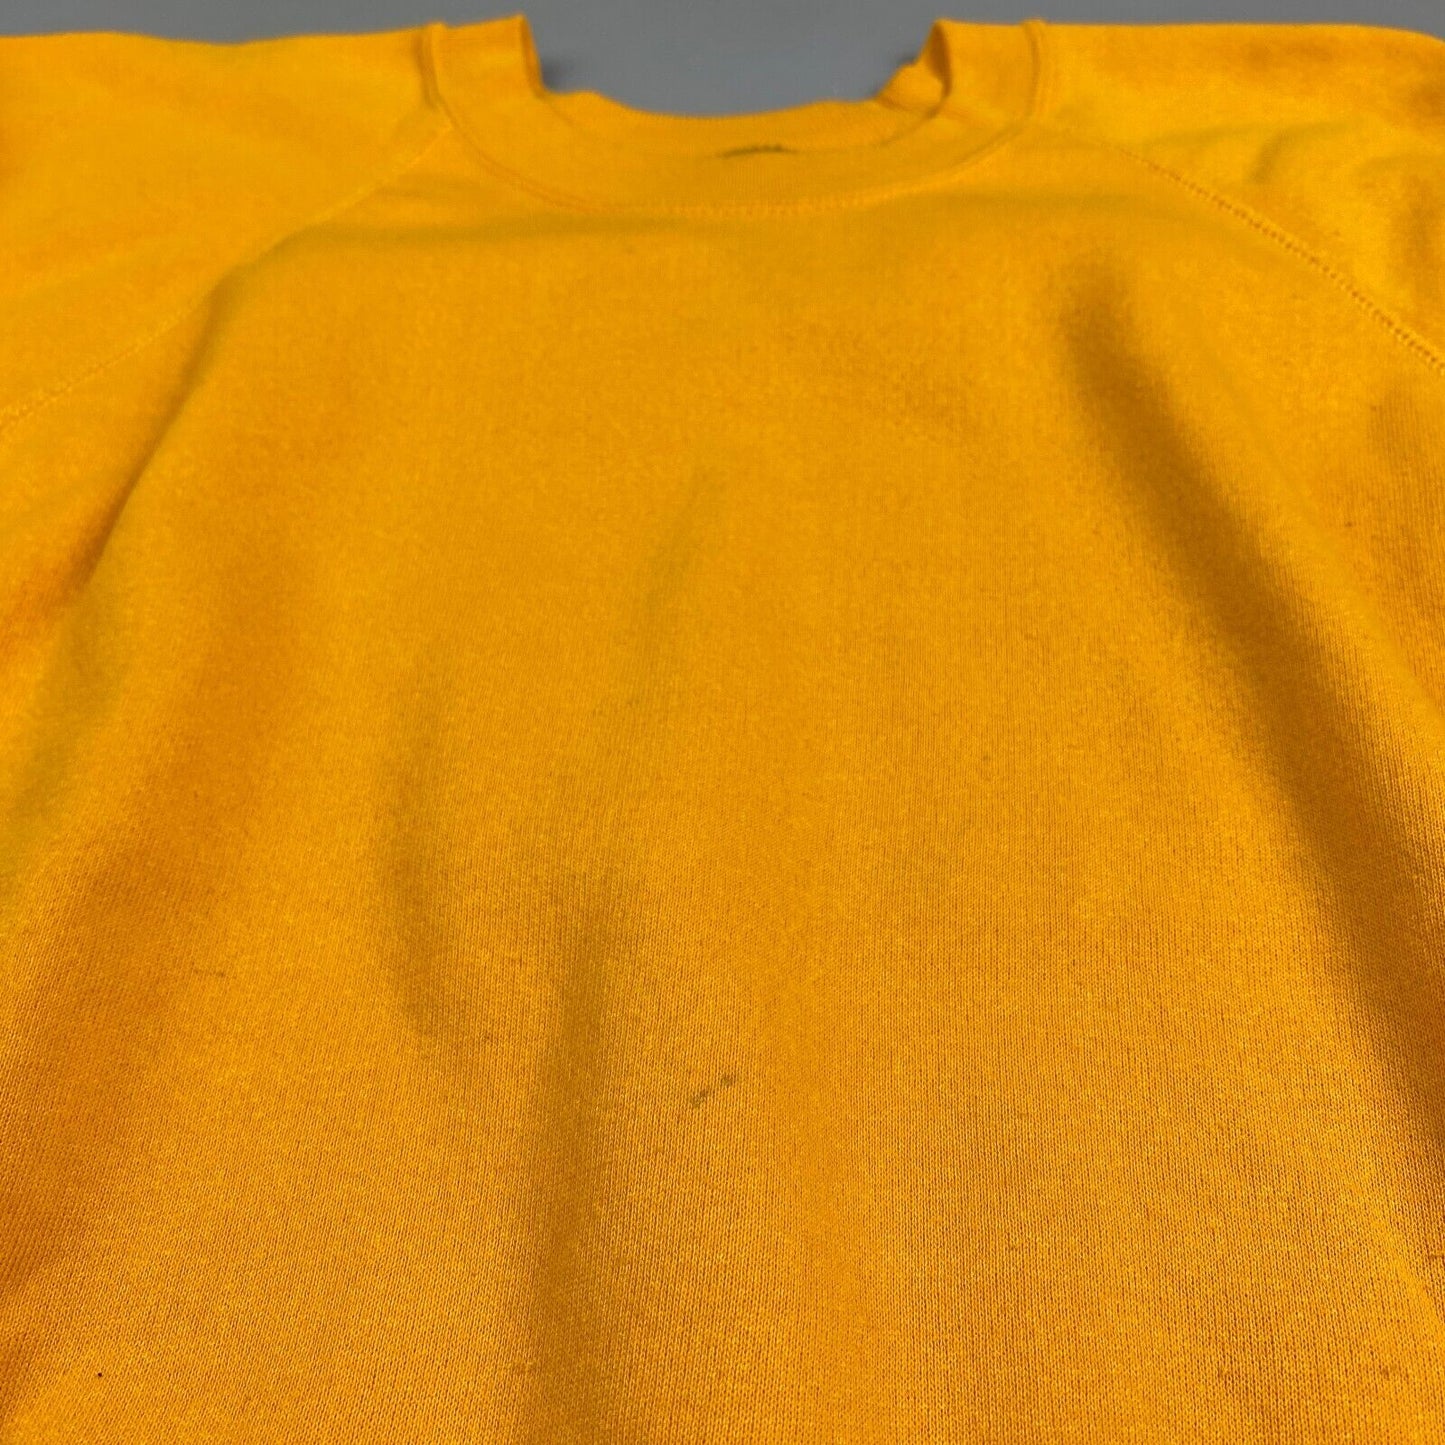 VINTAGE 90s Blank Yellow Crewneck Sweater sz Large Adult Men MadeinUSA